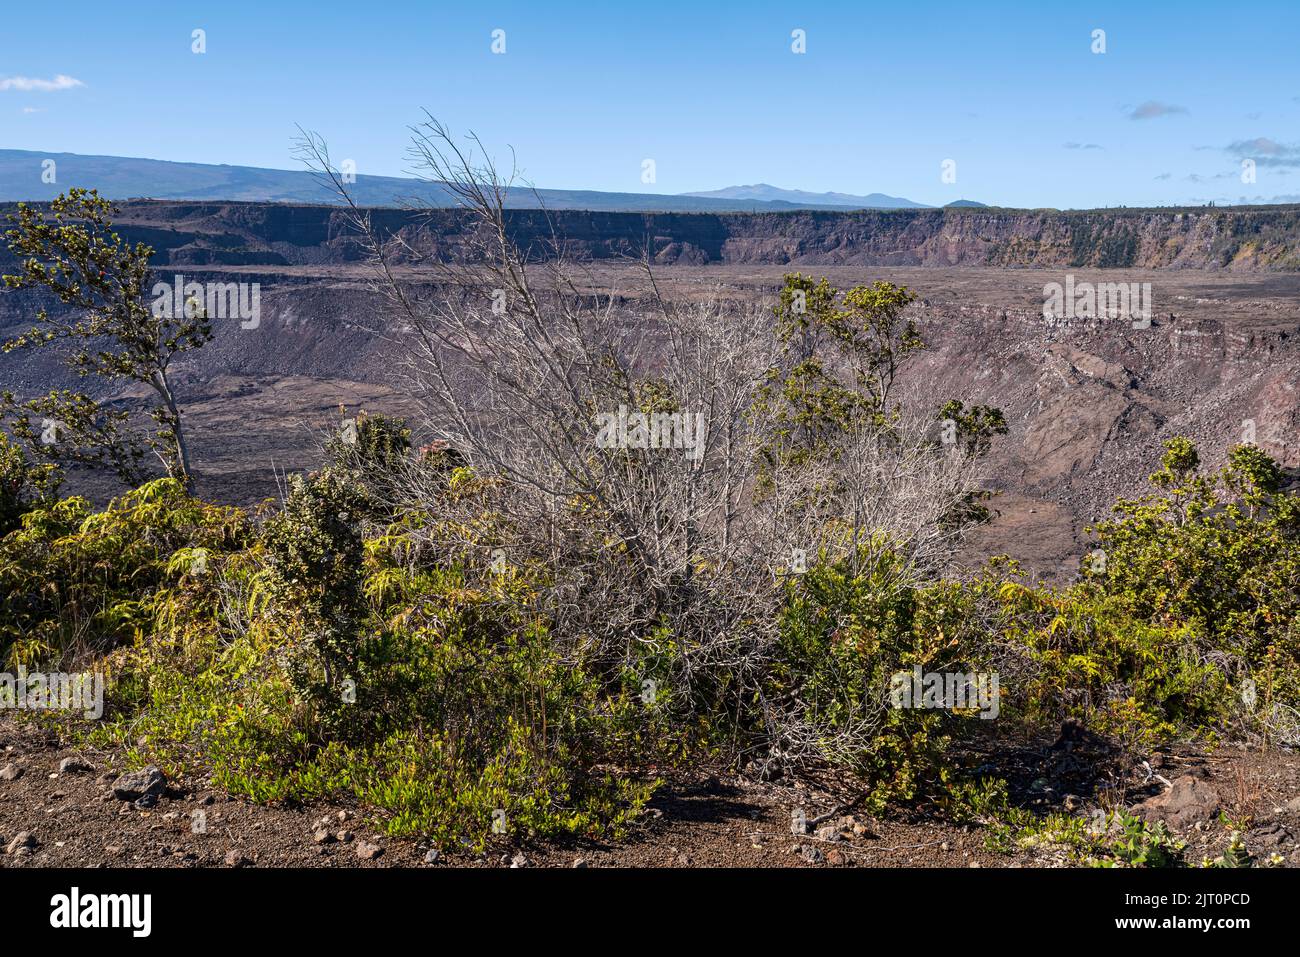 kilauea volcano and landscape at hawaii volcanoes national park Stock Photo